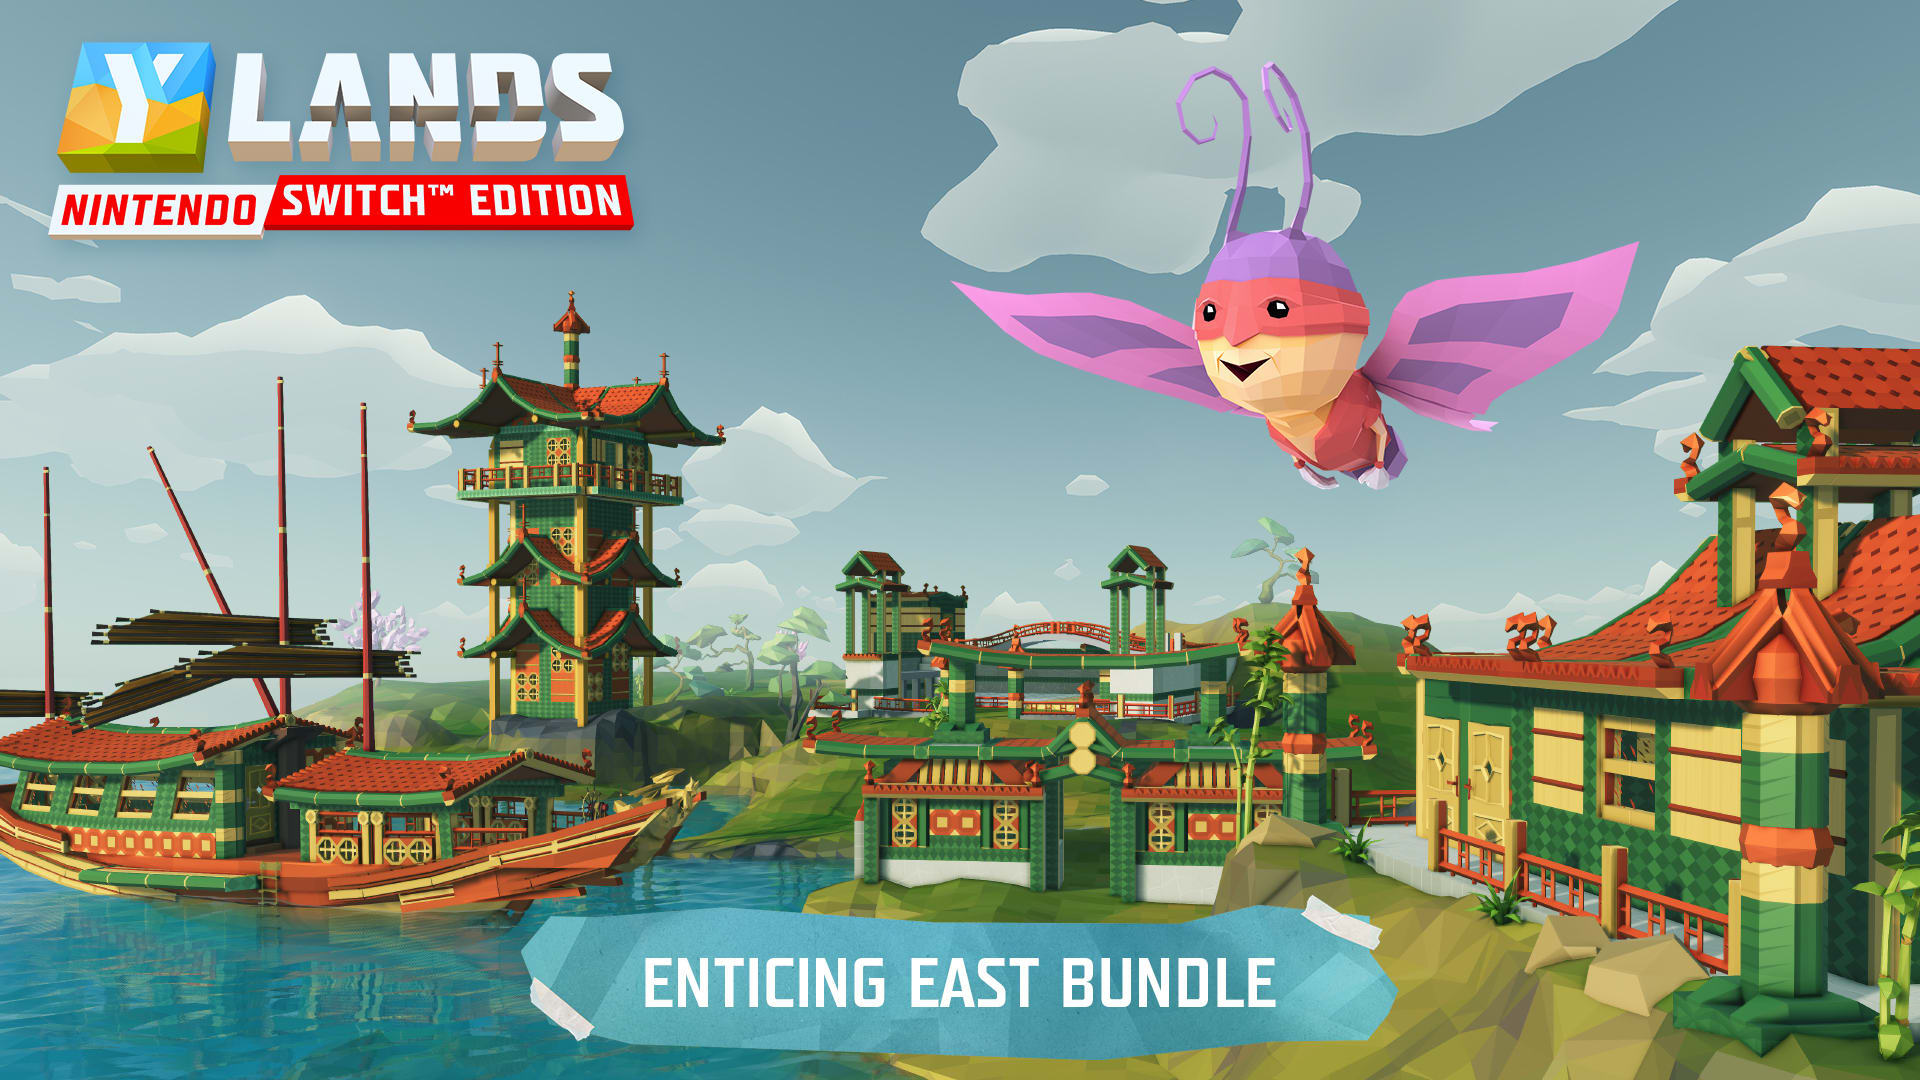 Ylands: Nintendo Switch™ Edition - Enticing East Bundle